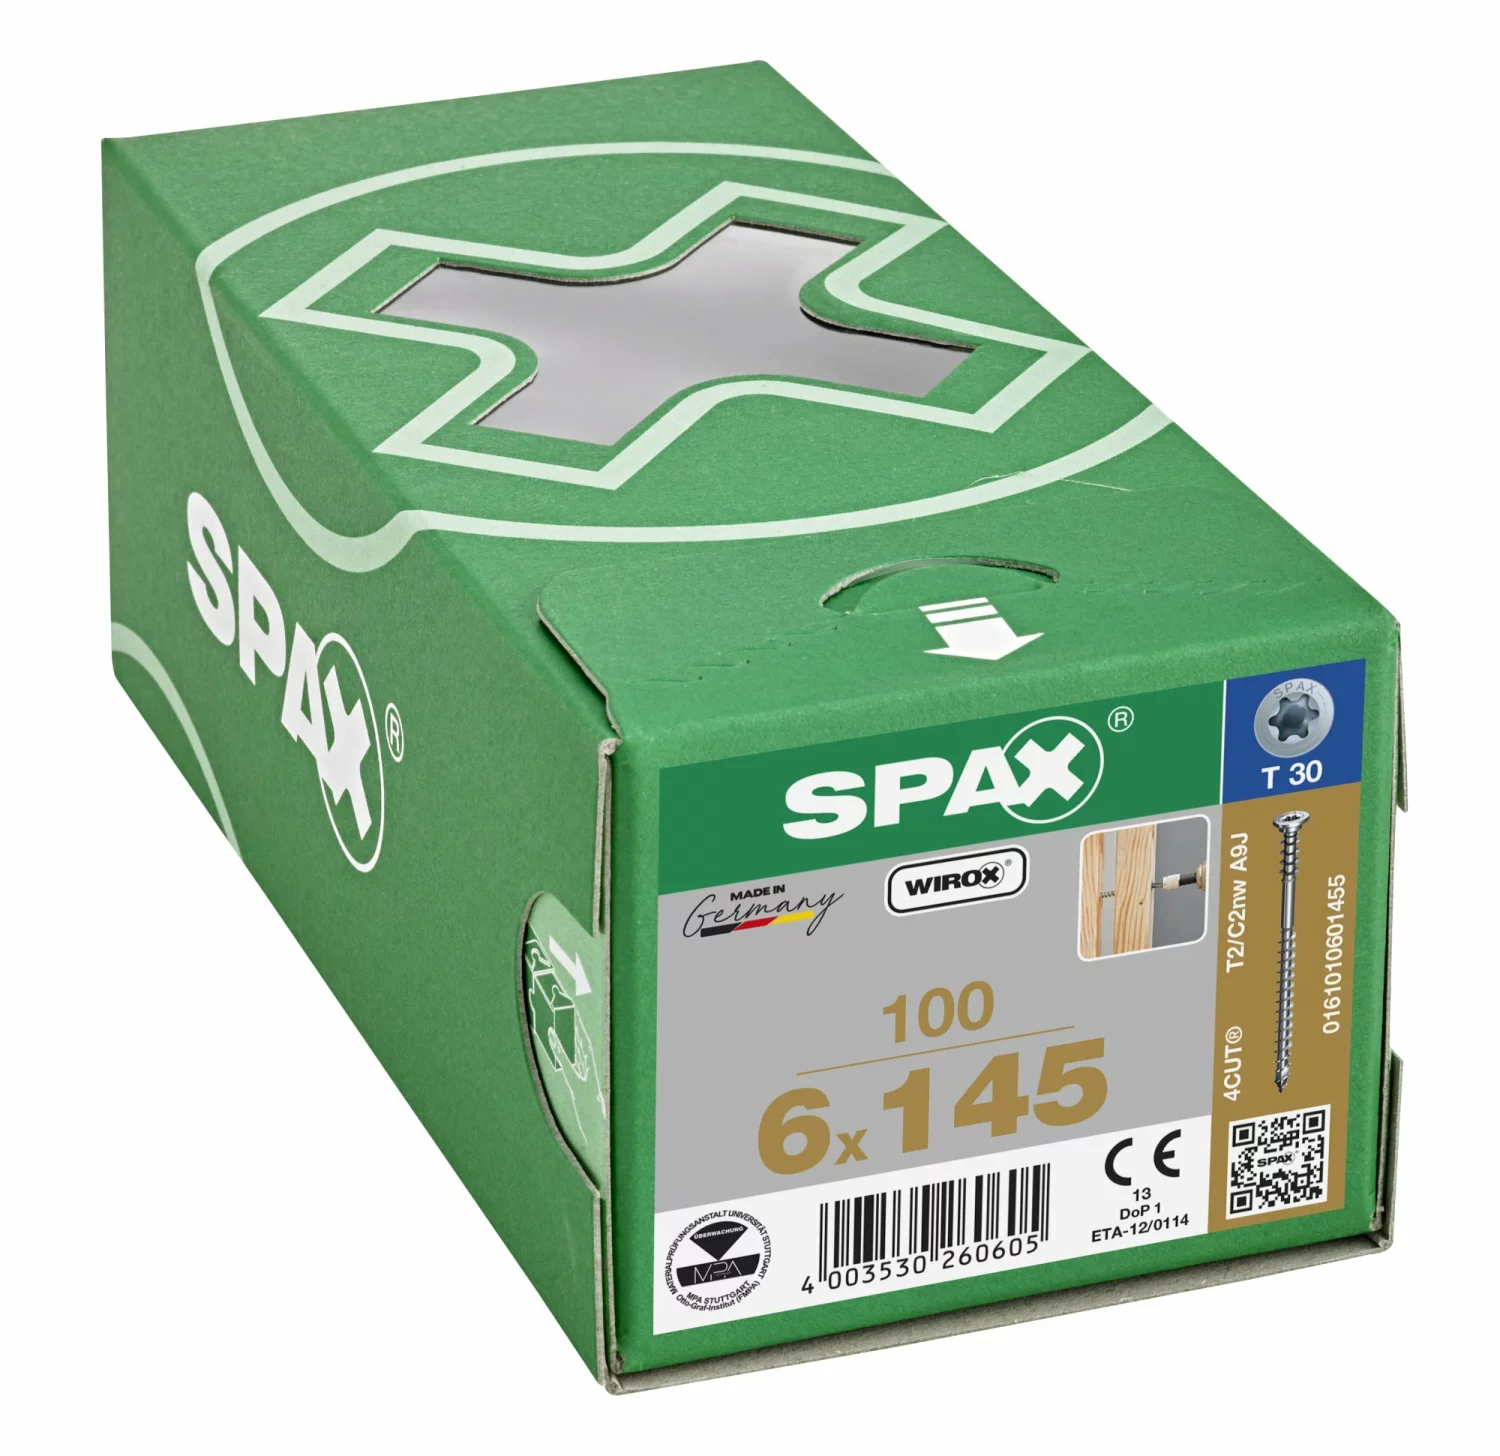 SPAX 161010601455 Stelschroef, Platkop, 6 x 145, Deeldraad, T-STAR plus T30 - WIROX - 100 stuks-image